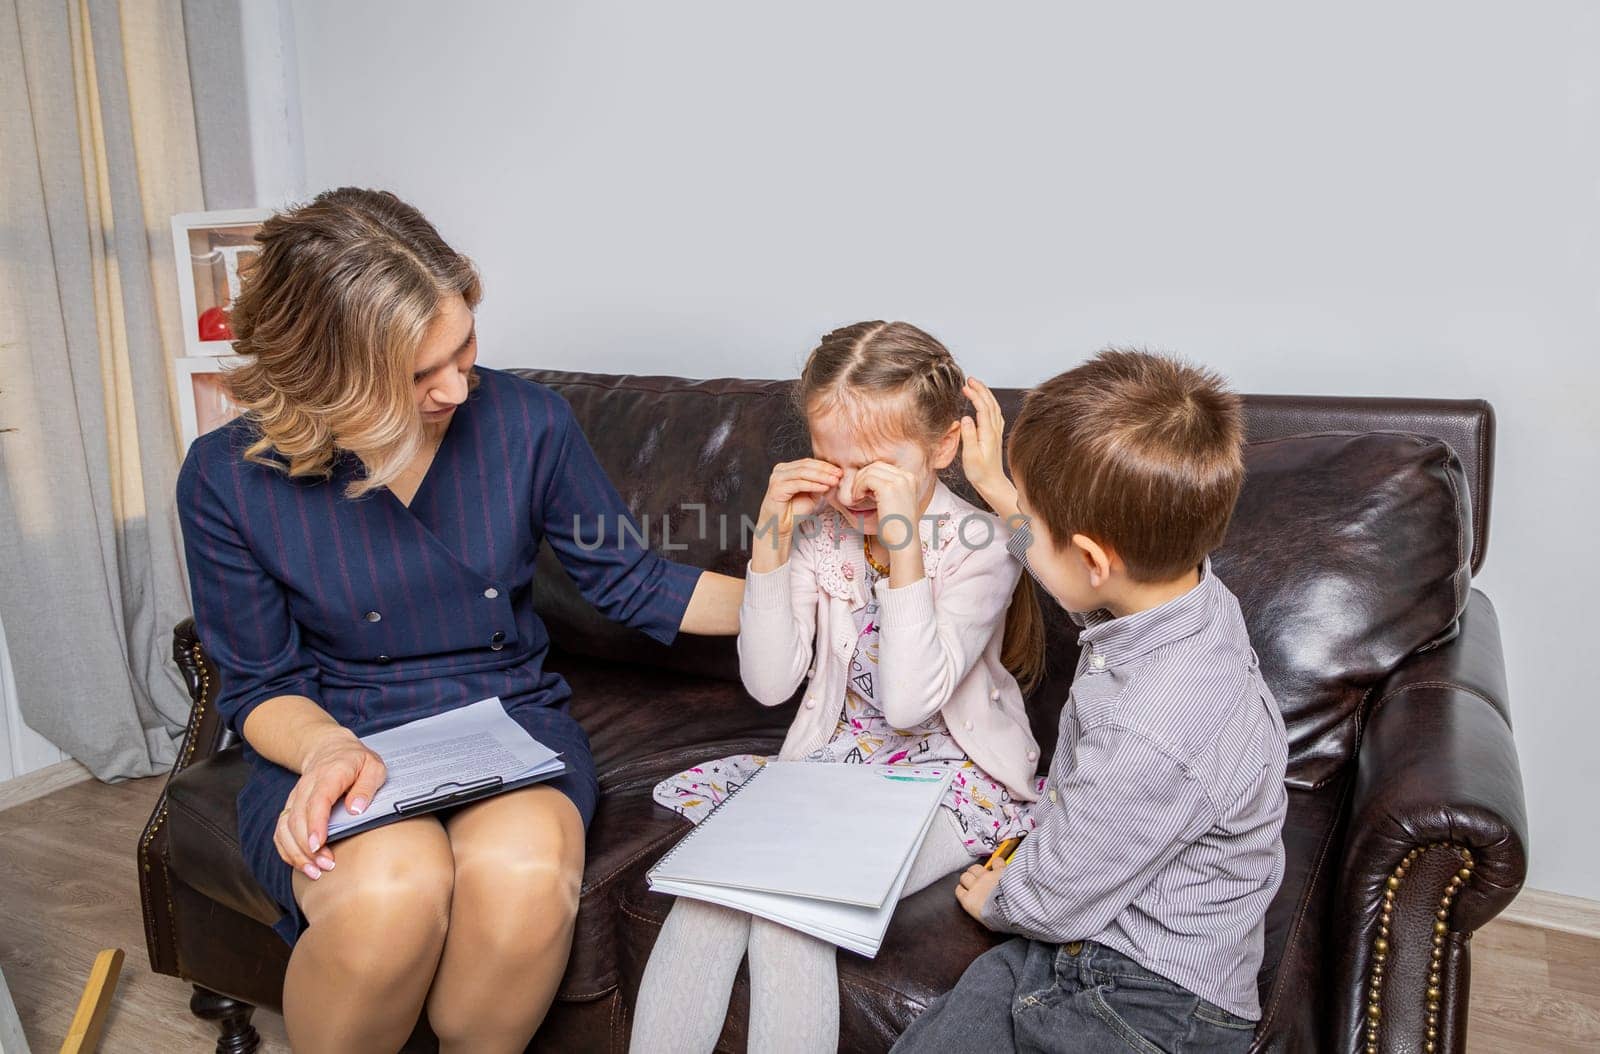 Girl psychologist calms upset girl. The kid is crying